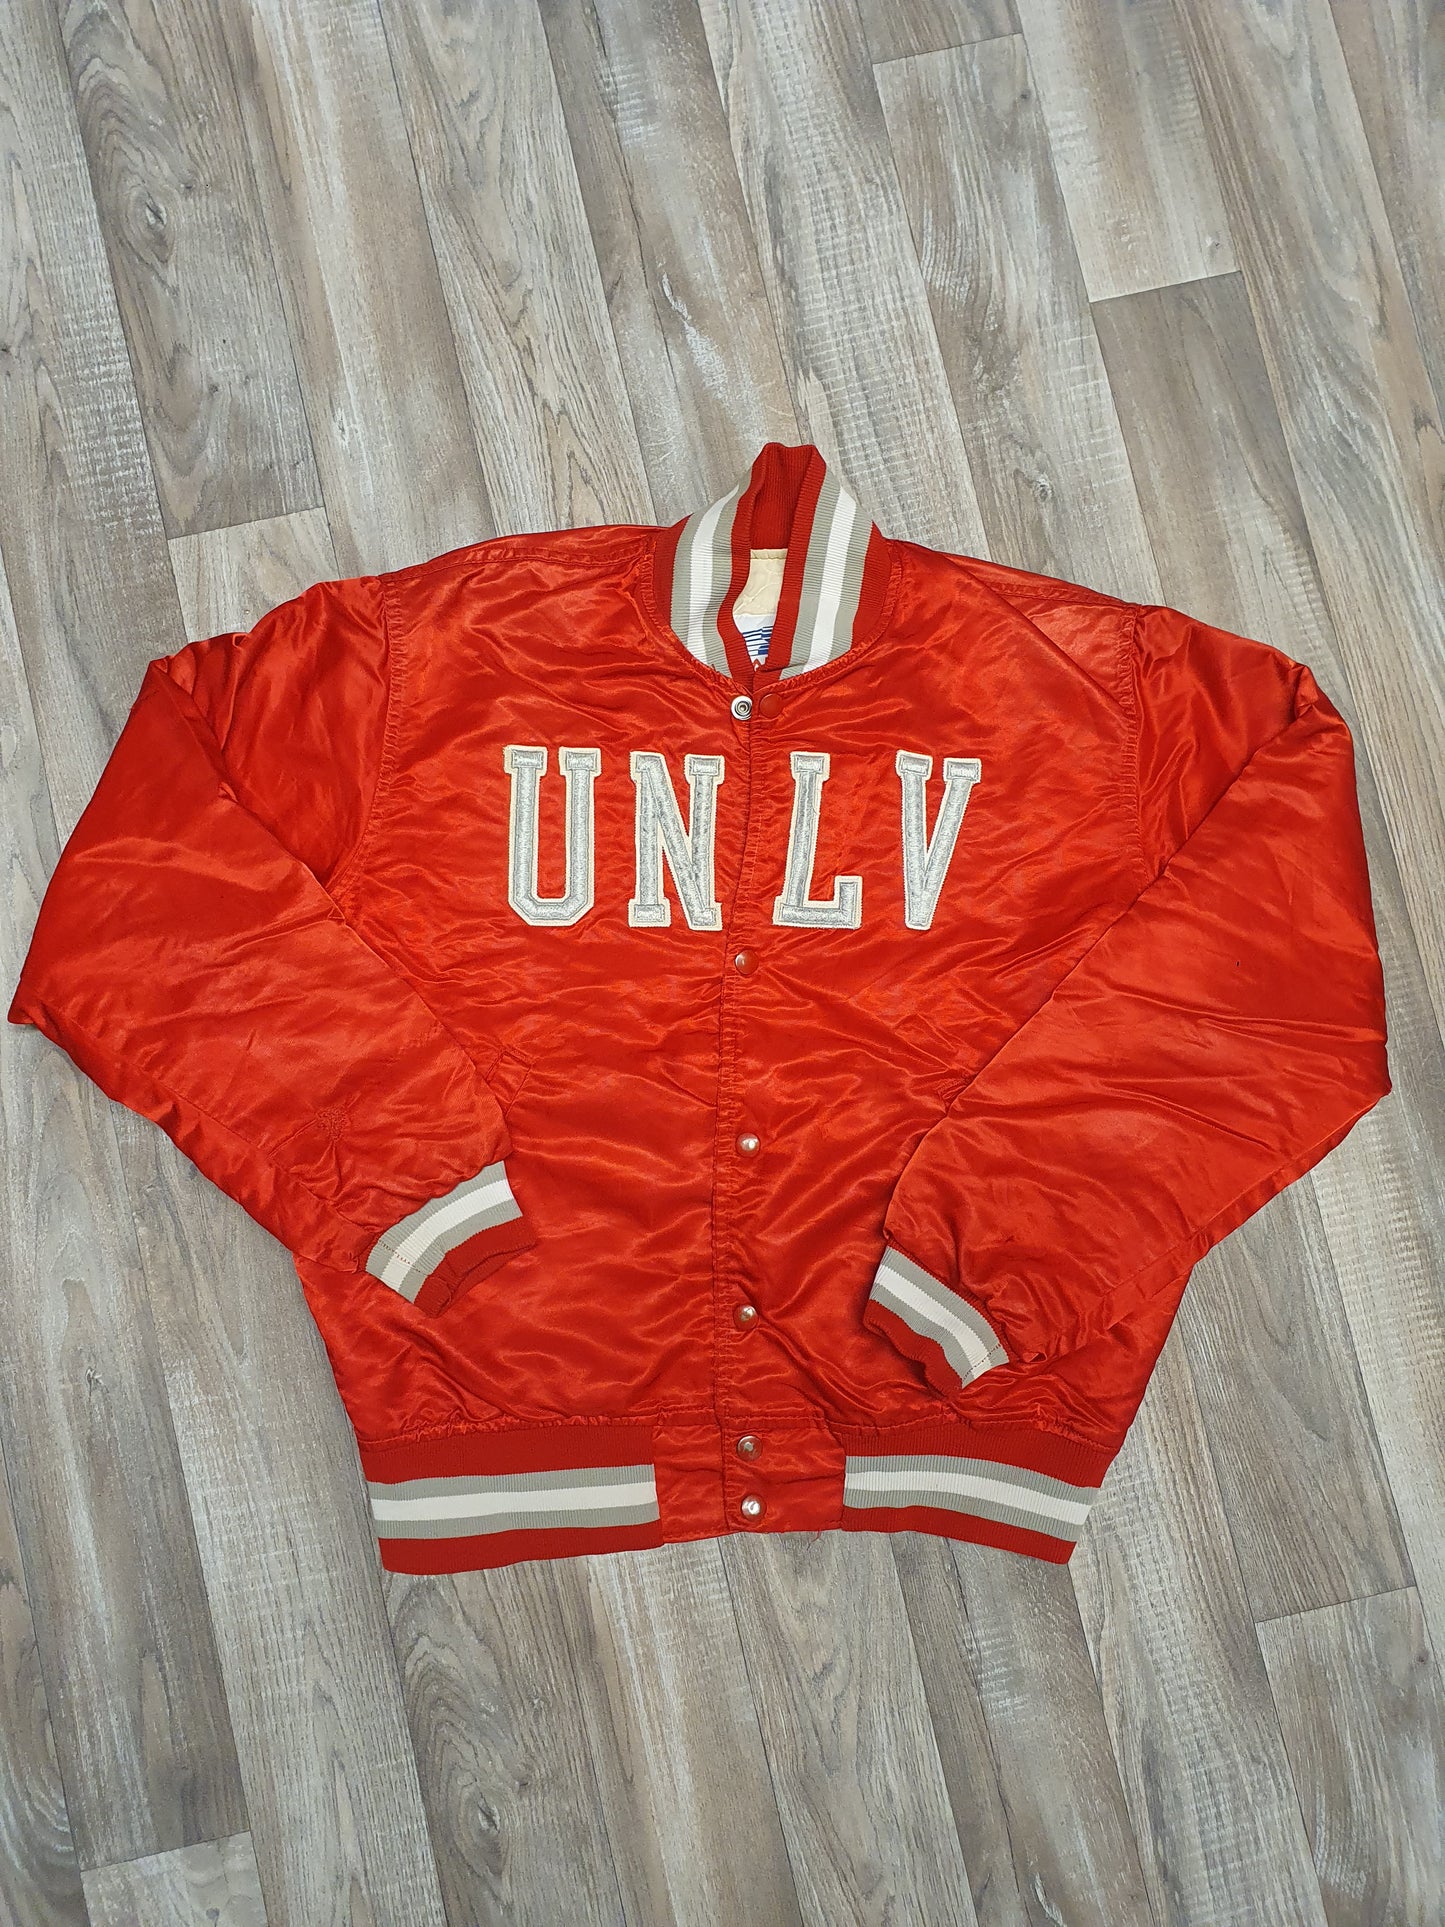 UNLV Jacket Size Medium